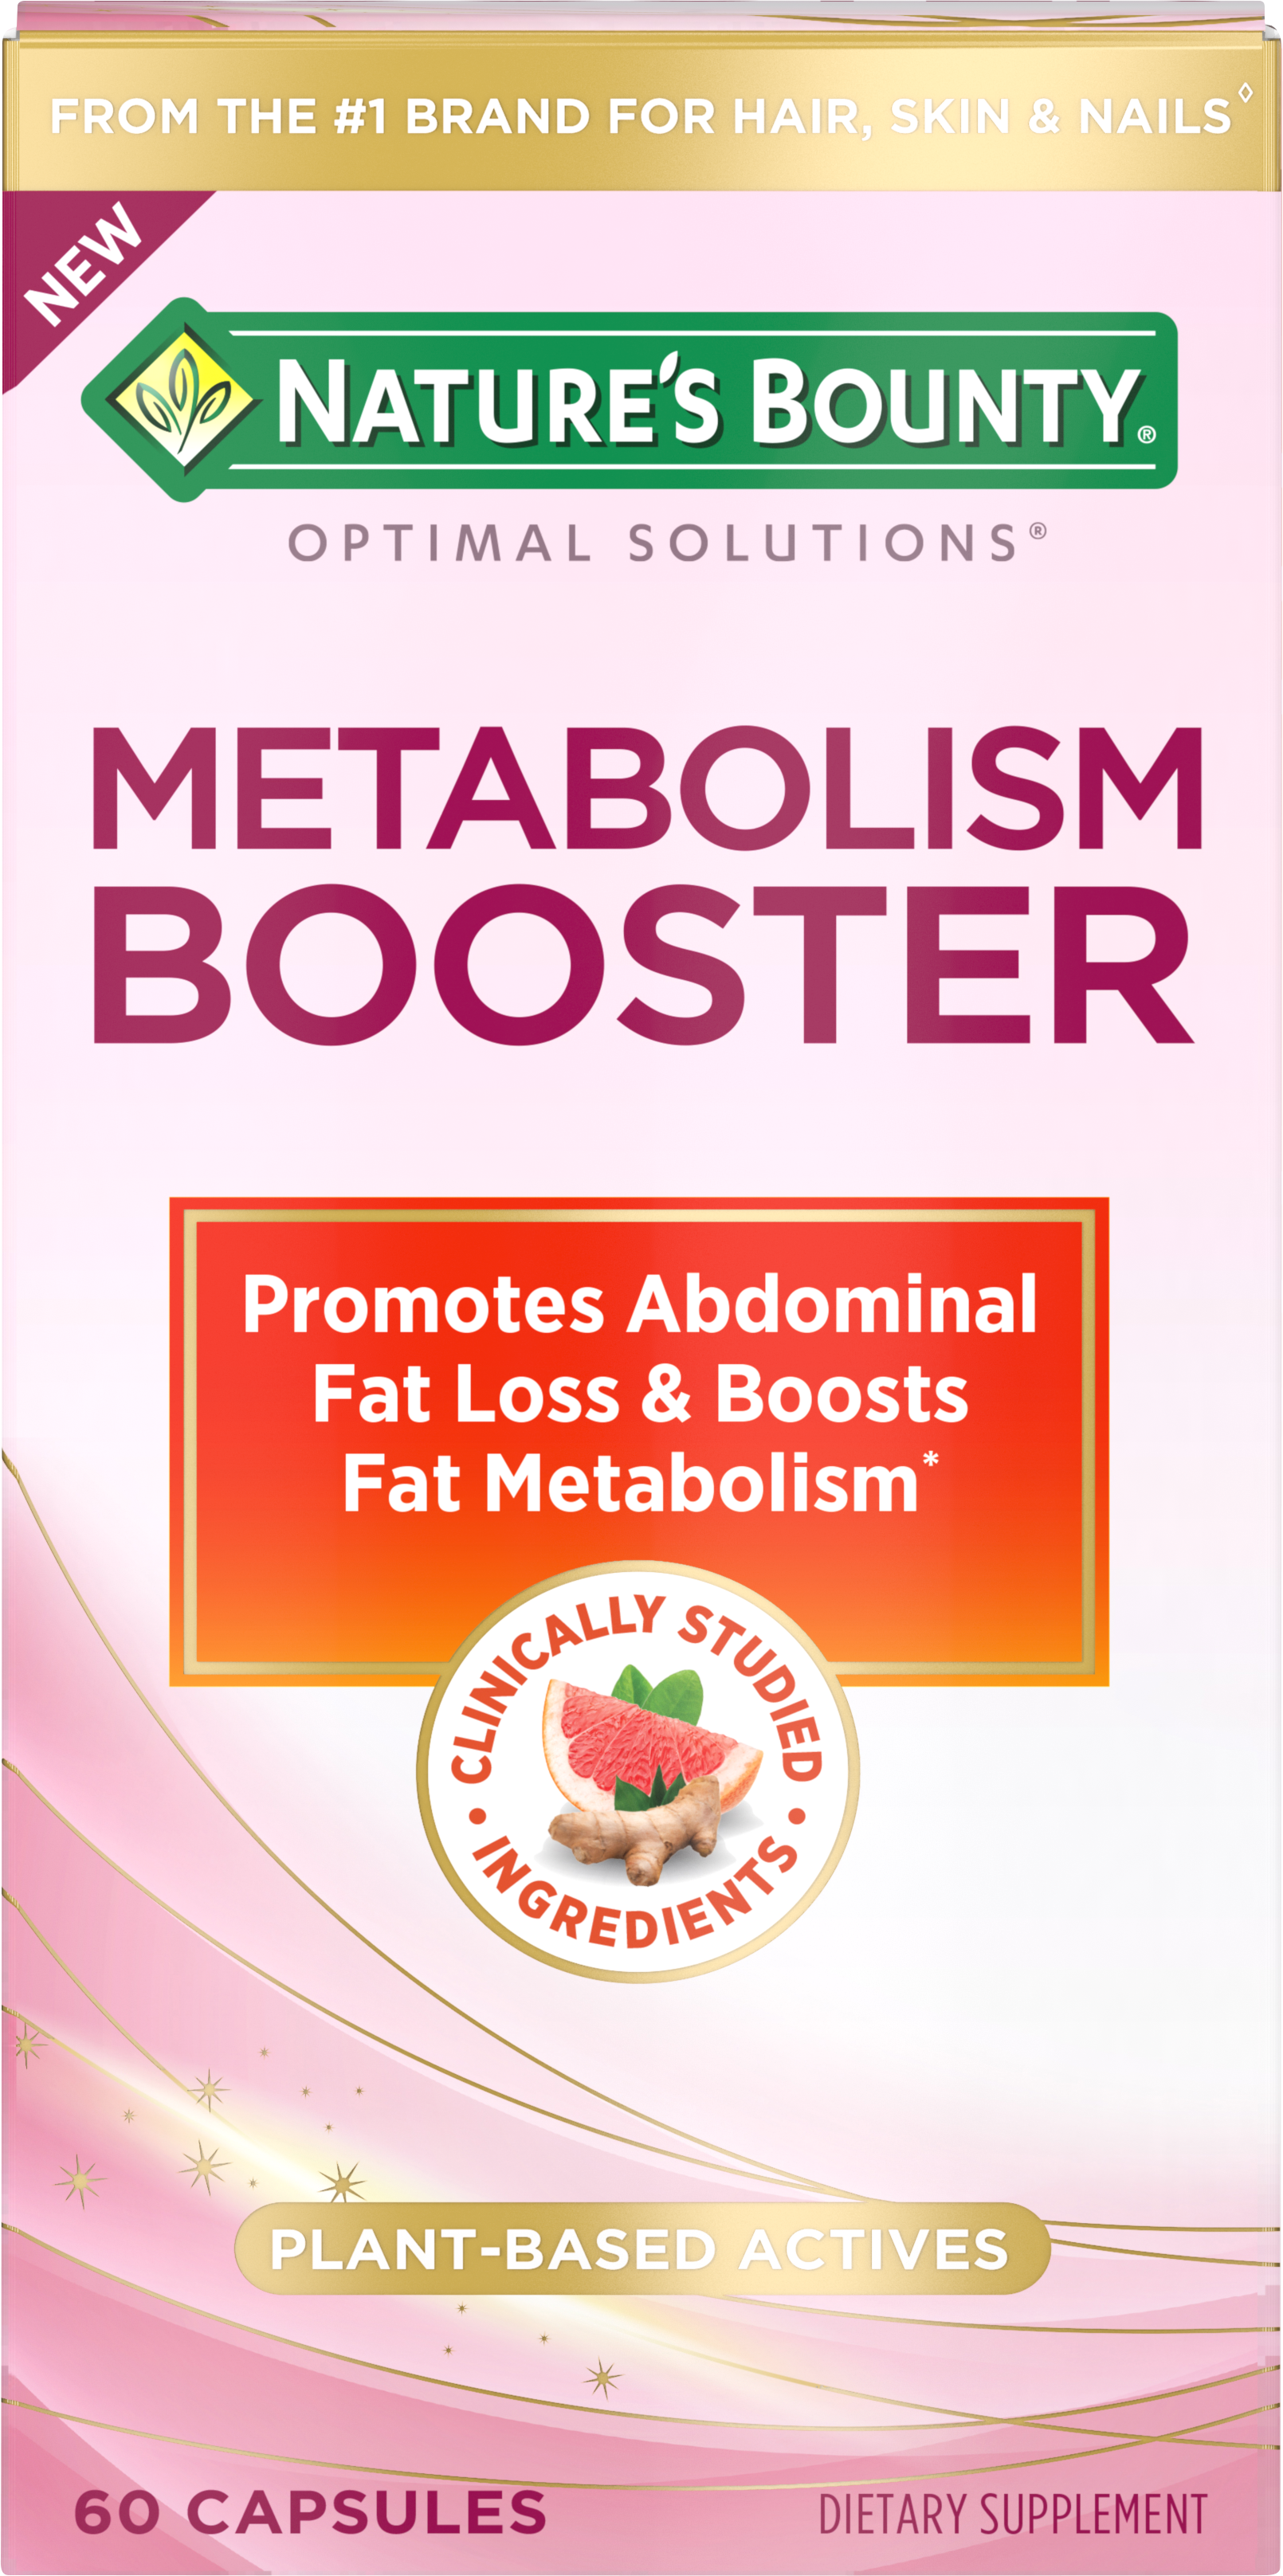 Metabolism-boosting supplements